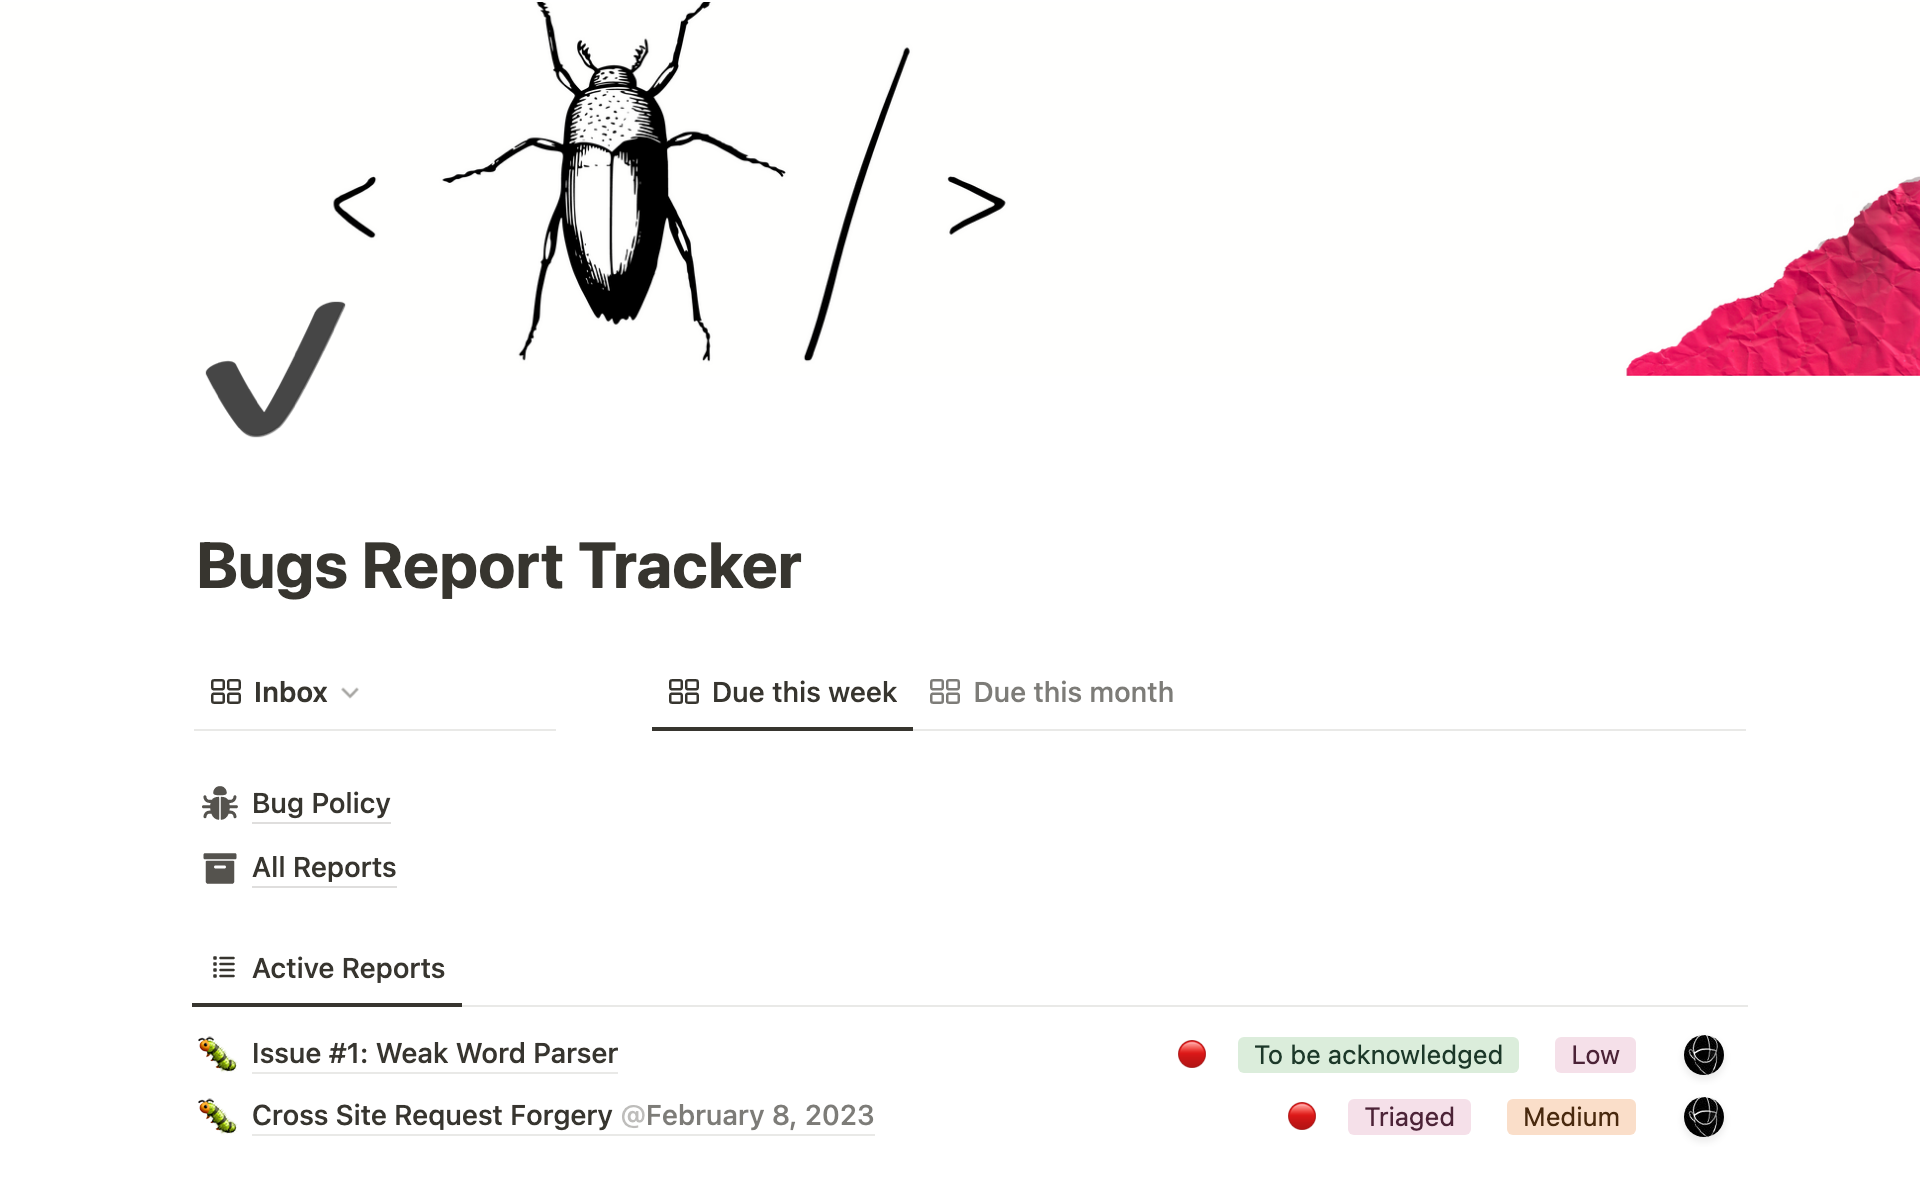 Aperçu du modèle de Bug Report Tracker